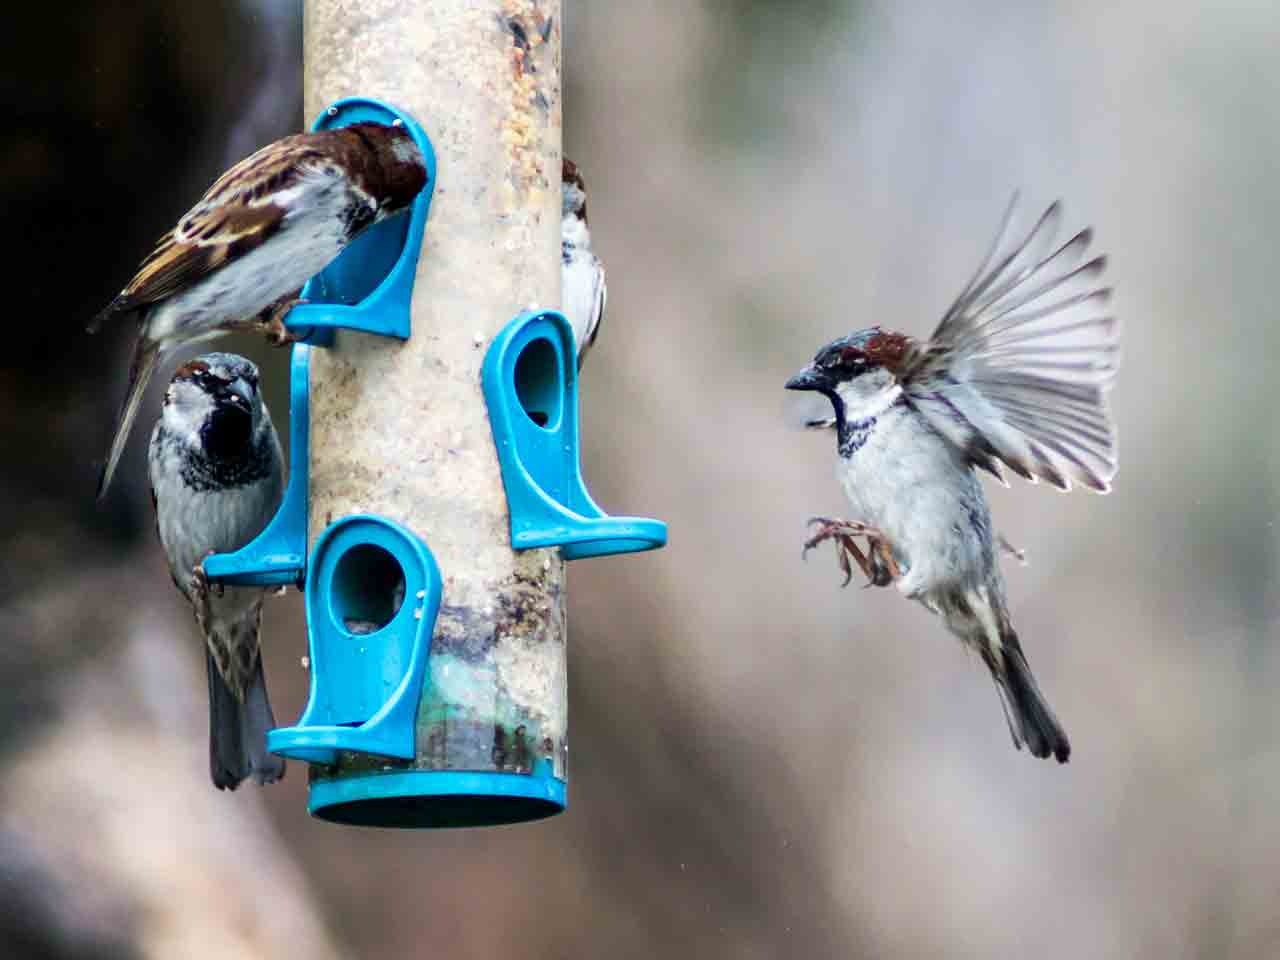 House sparrows feed on a garden feeding station